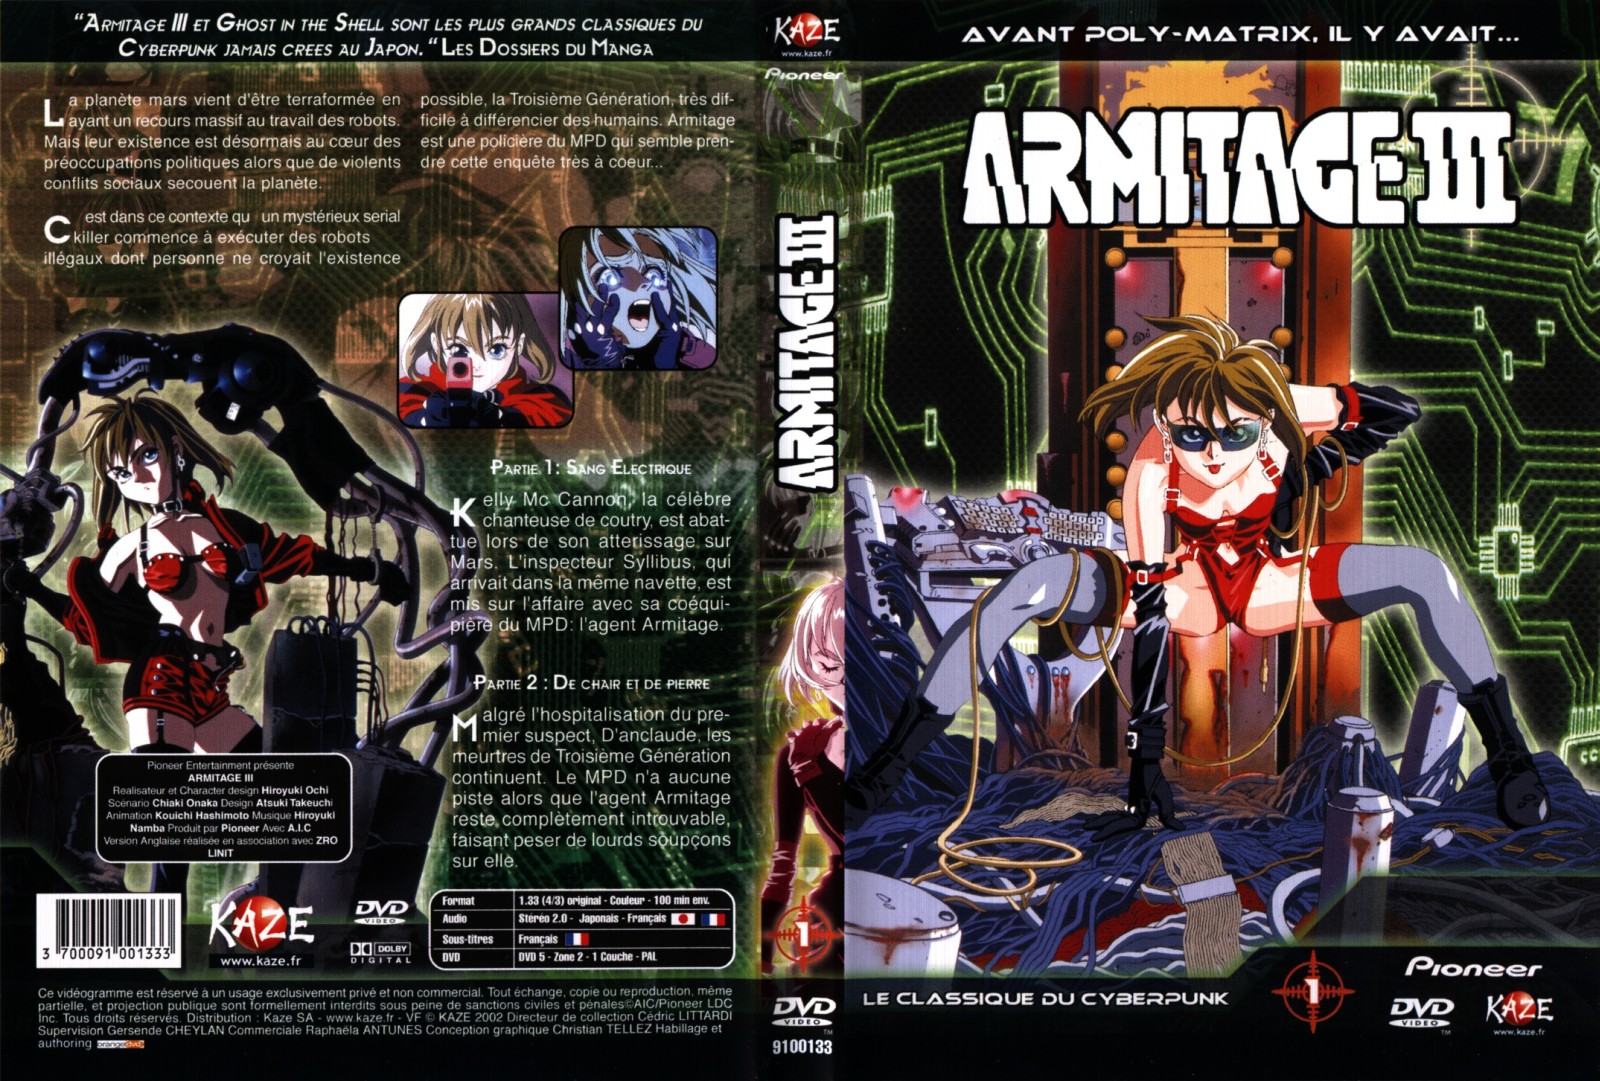 Jaquette DVD Armitage 3 vol 1